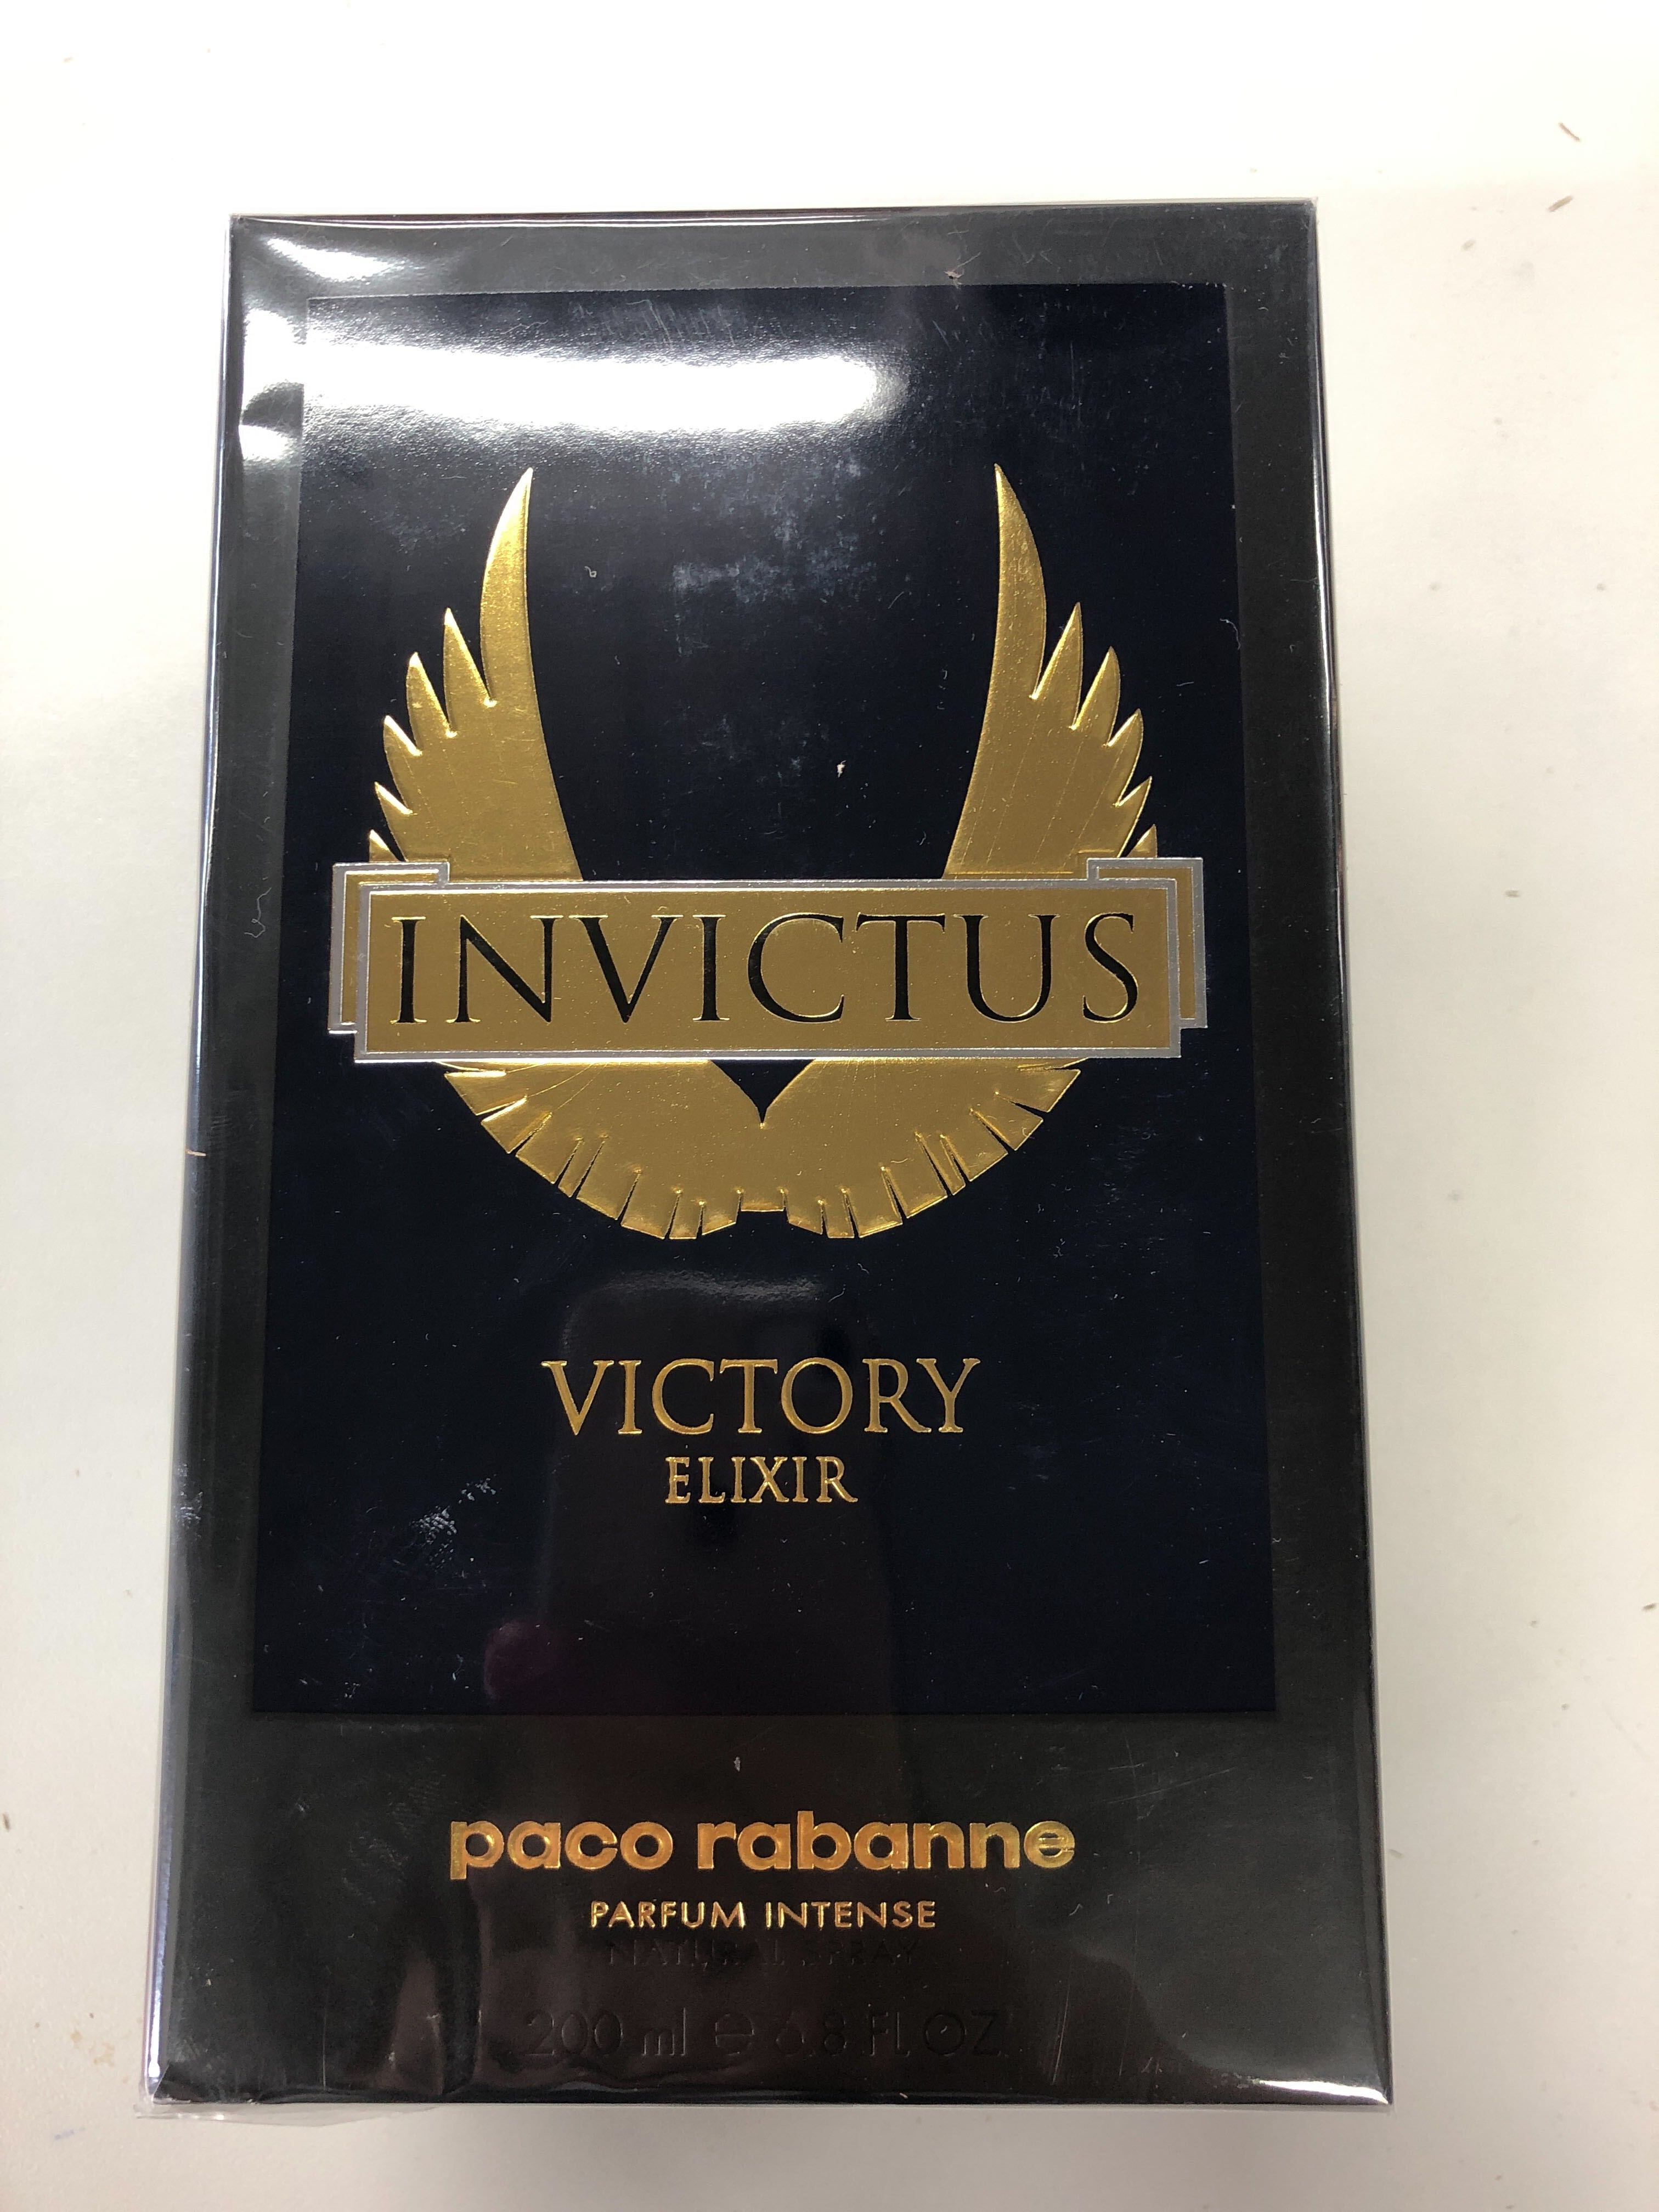 Paco Rabanne Invictus Victory Elixir Parfum Intense 200 ml - Walmart.com